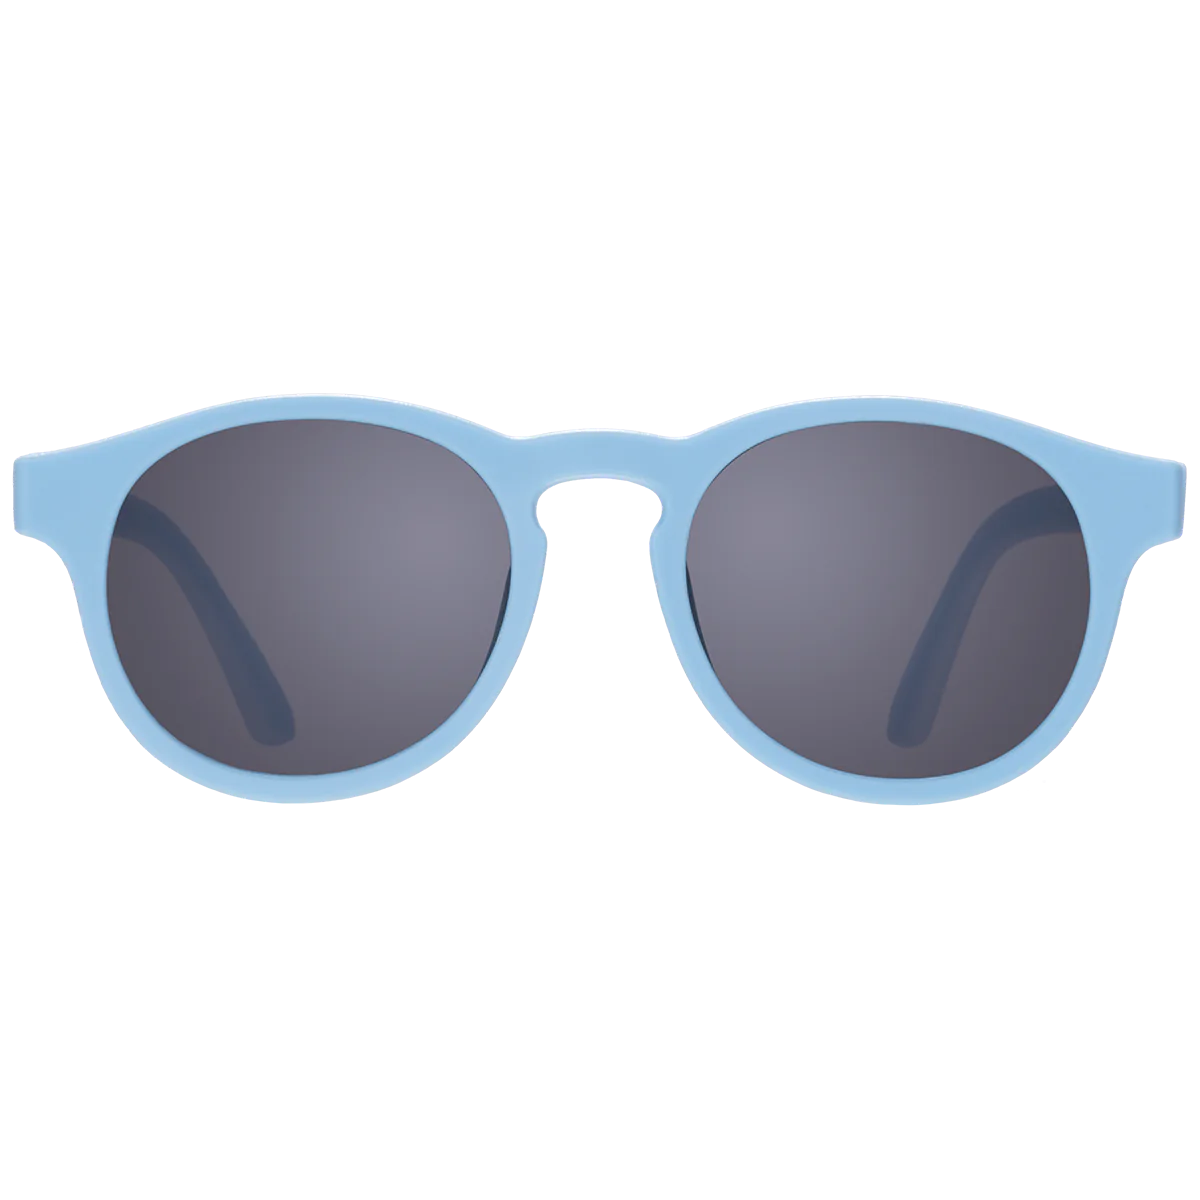 Babiators Original Keyholes - Bermuda Blue Sunglasses Babiators 